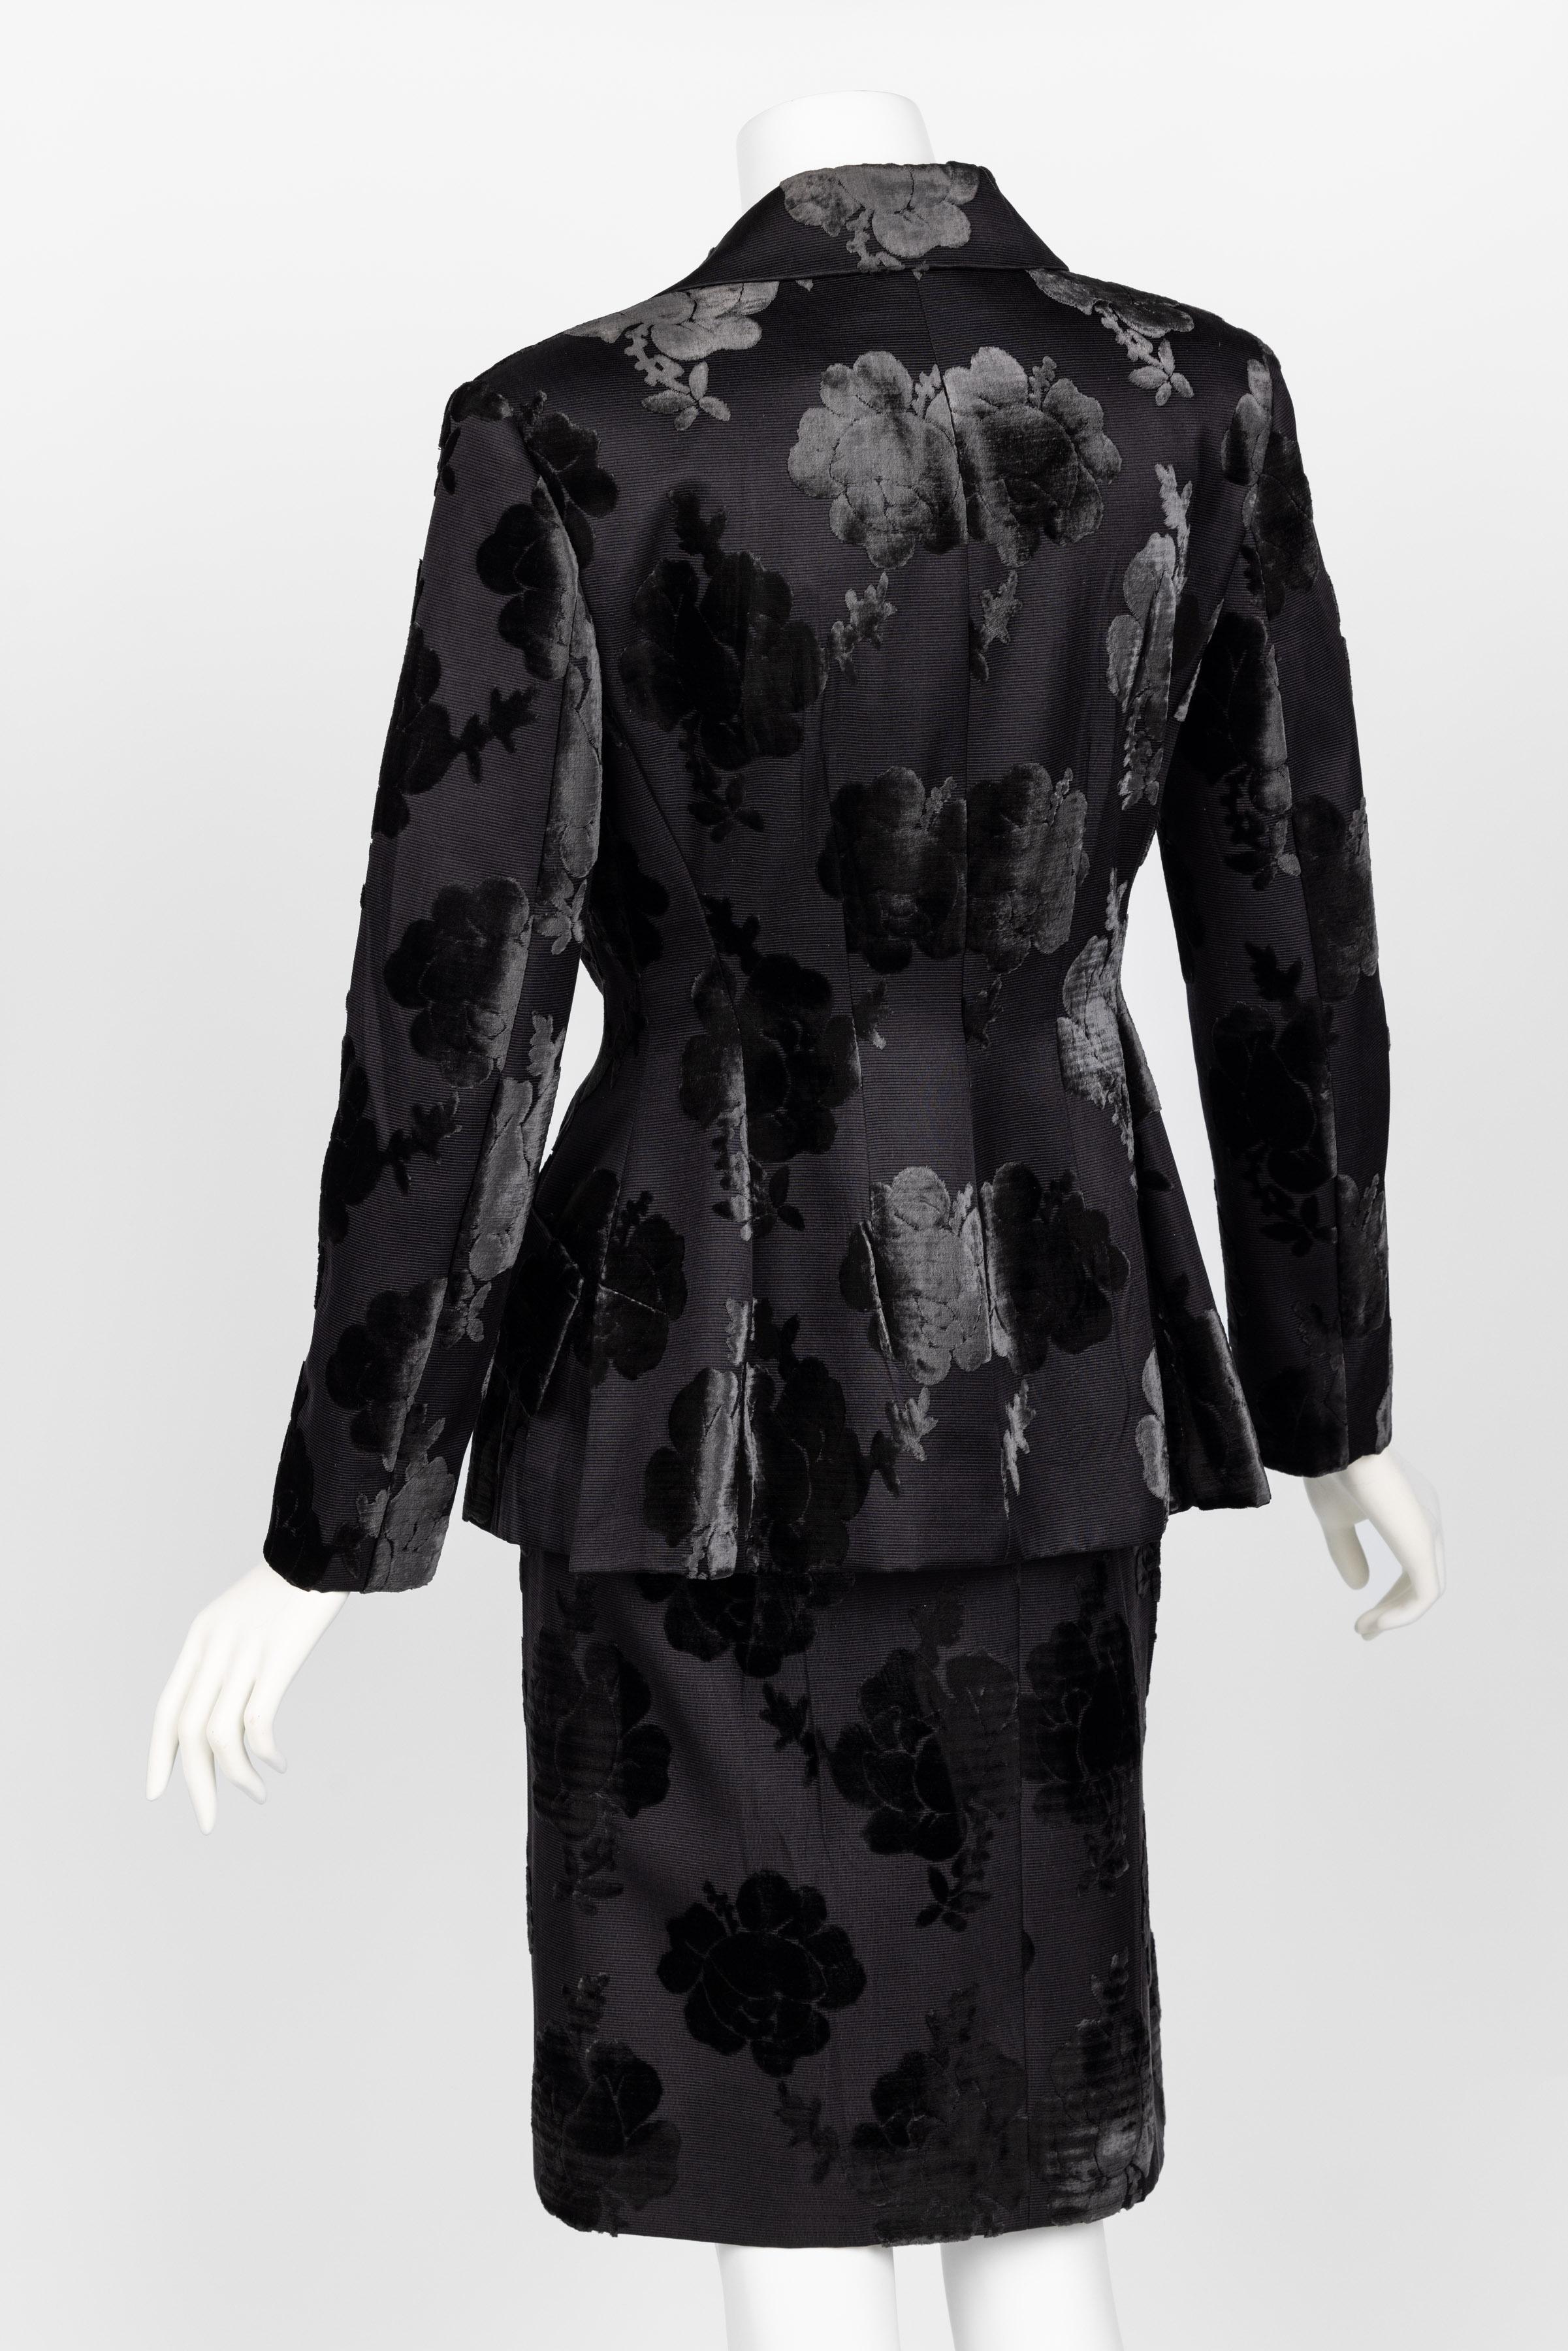 Women's Prada F/W 2009 Runway Black Silk Velvet Floral Skirt Suit New W/Tags For Sale